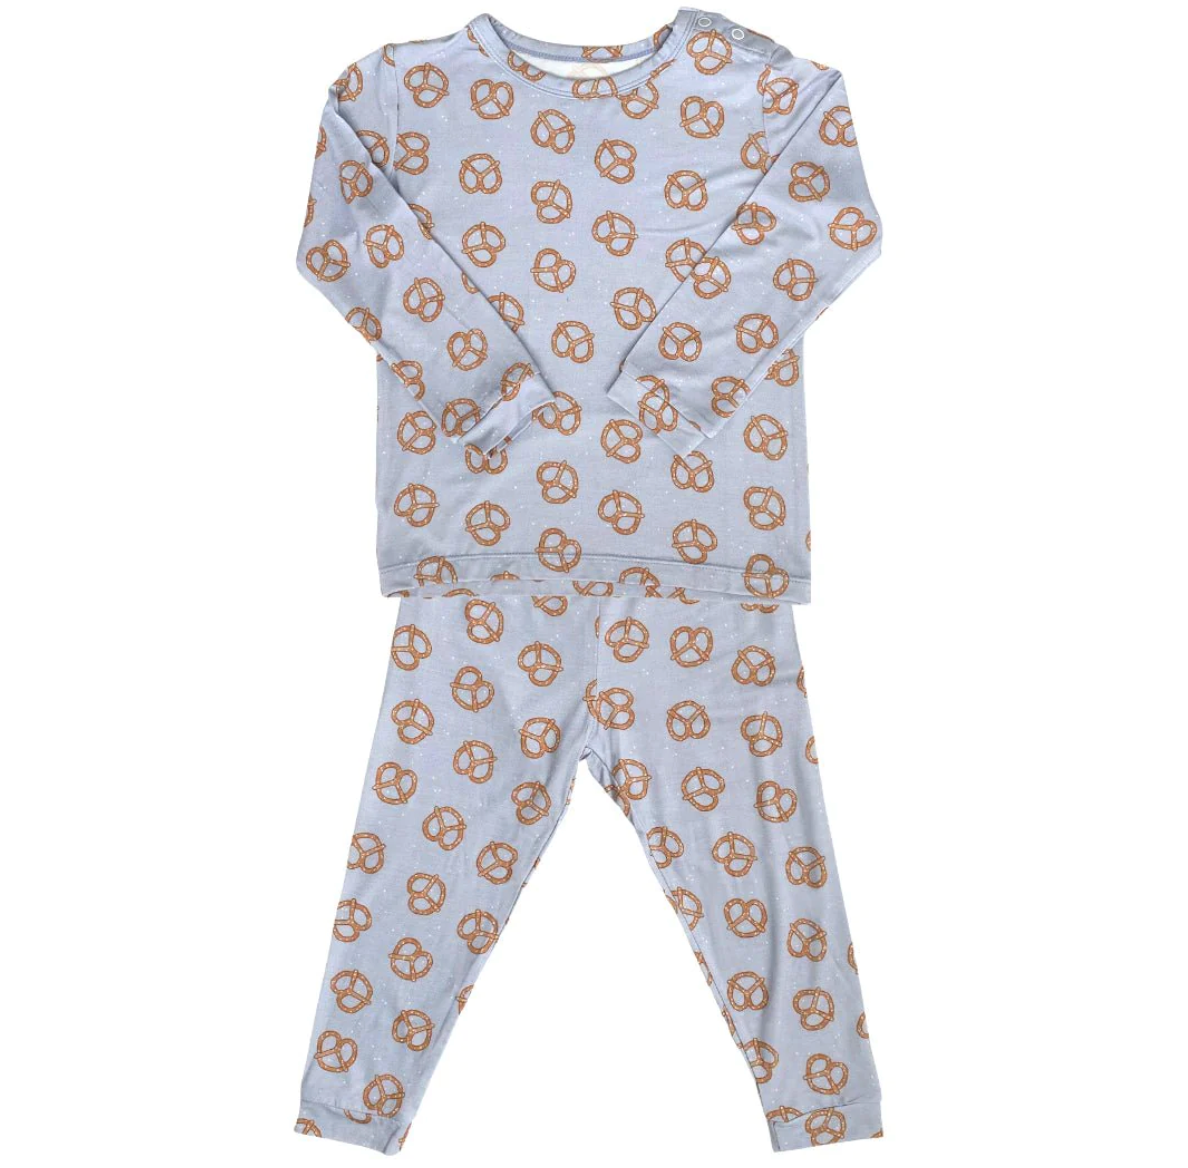 Dear Perli Toddler Pajama Set in Pretzel Twist